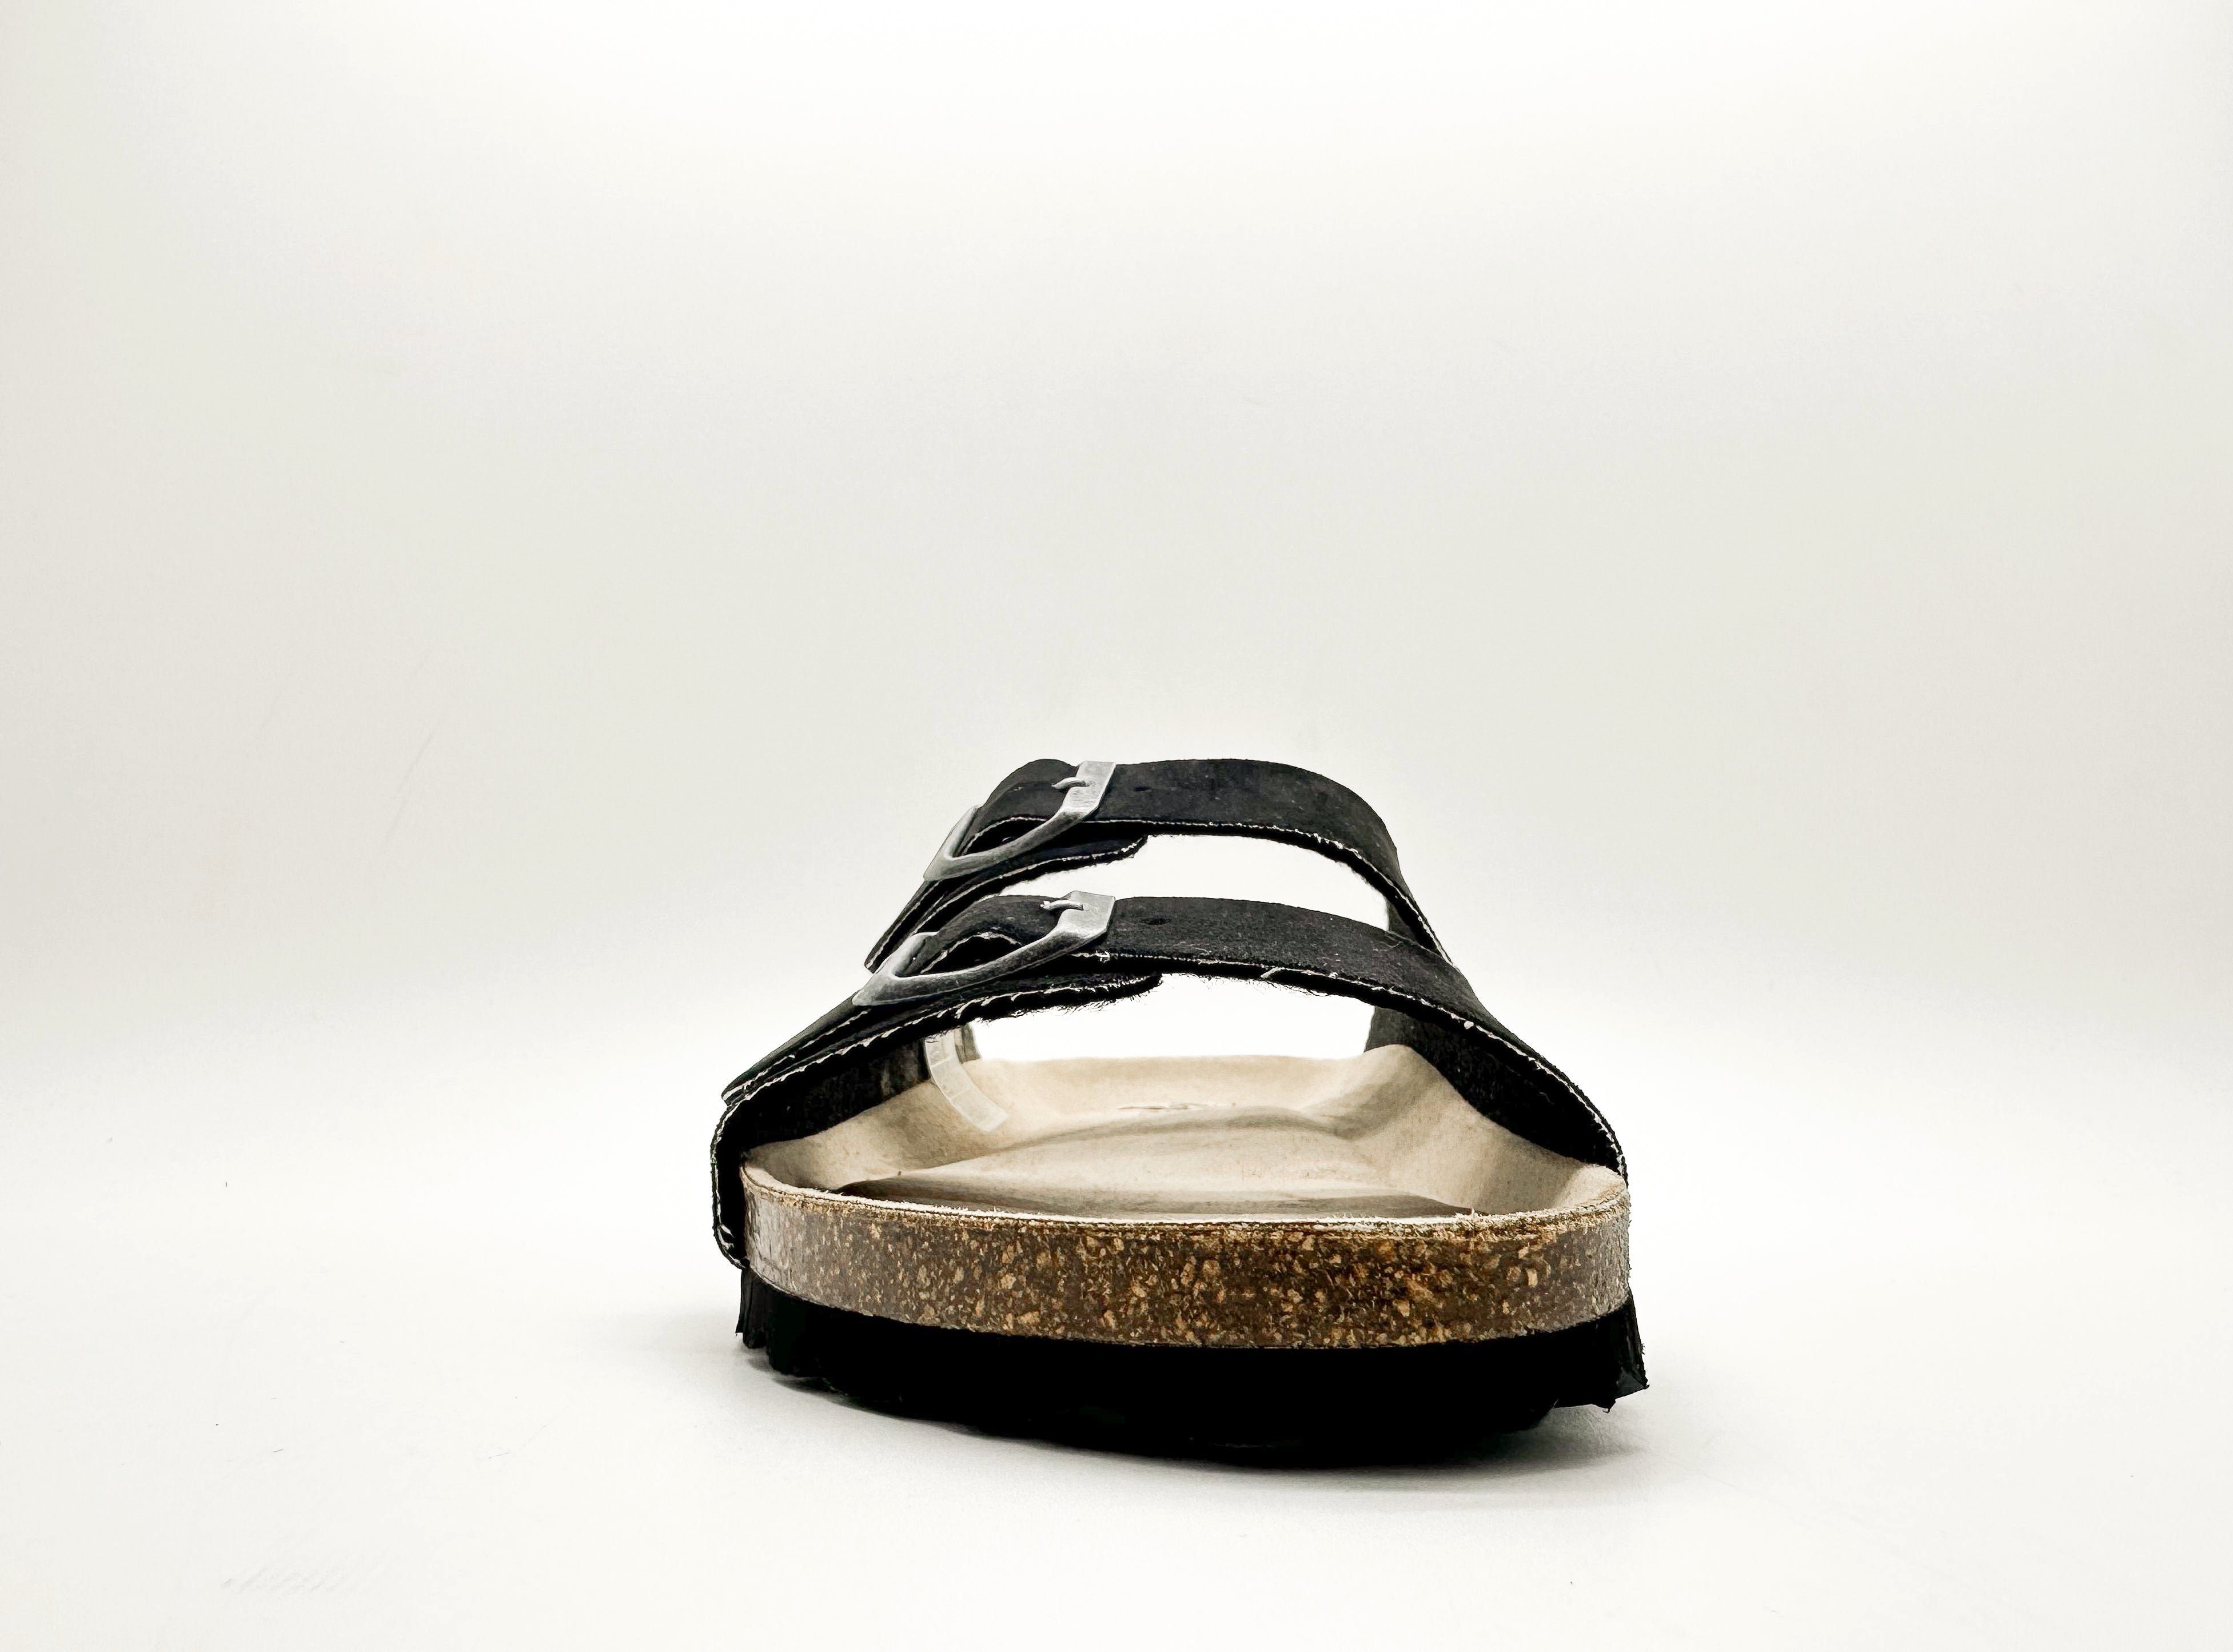 Sandale Rec Black Bio Sandal 1856 Vegan thies ® Eco